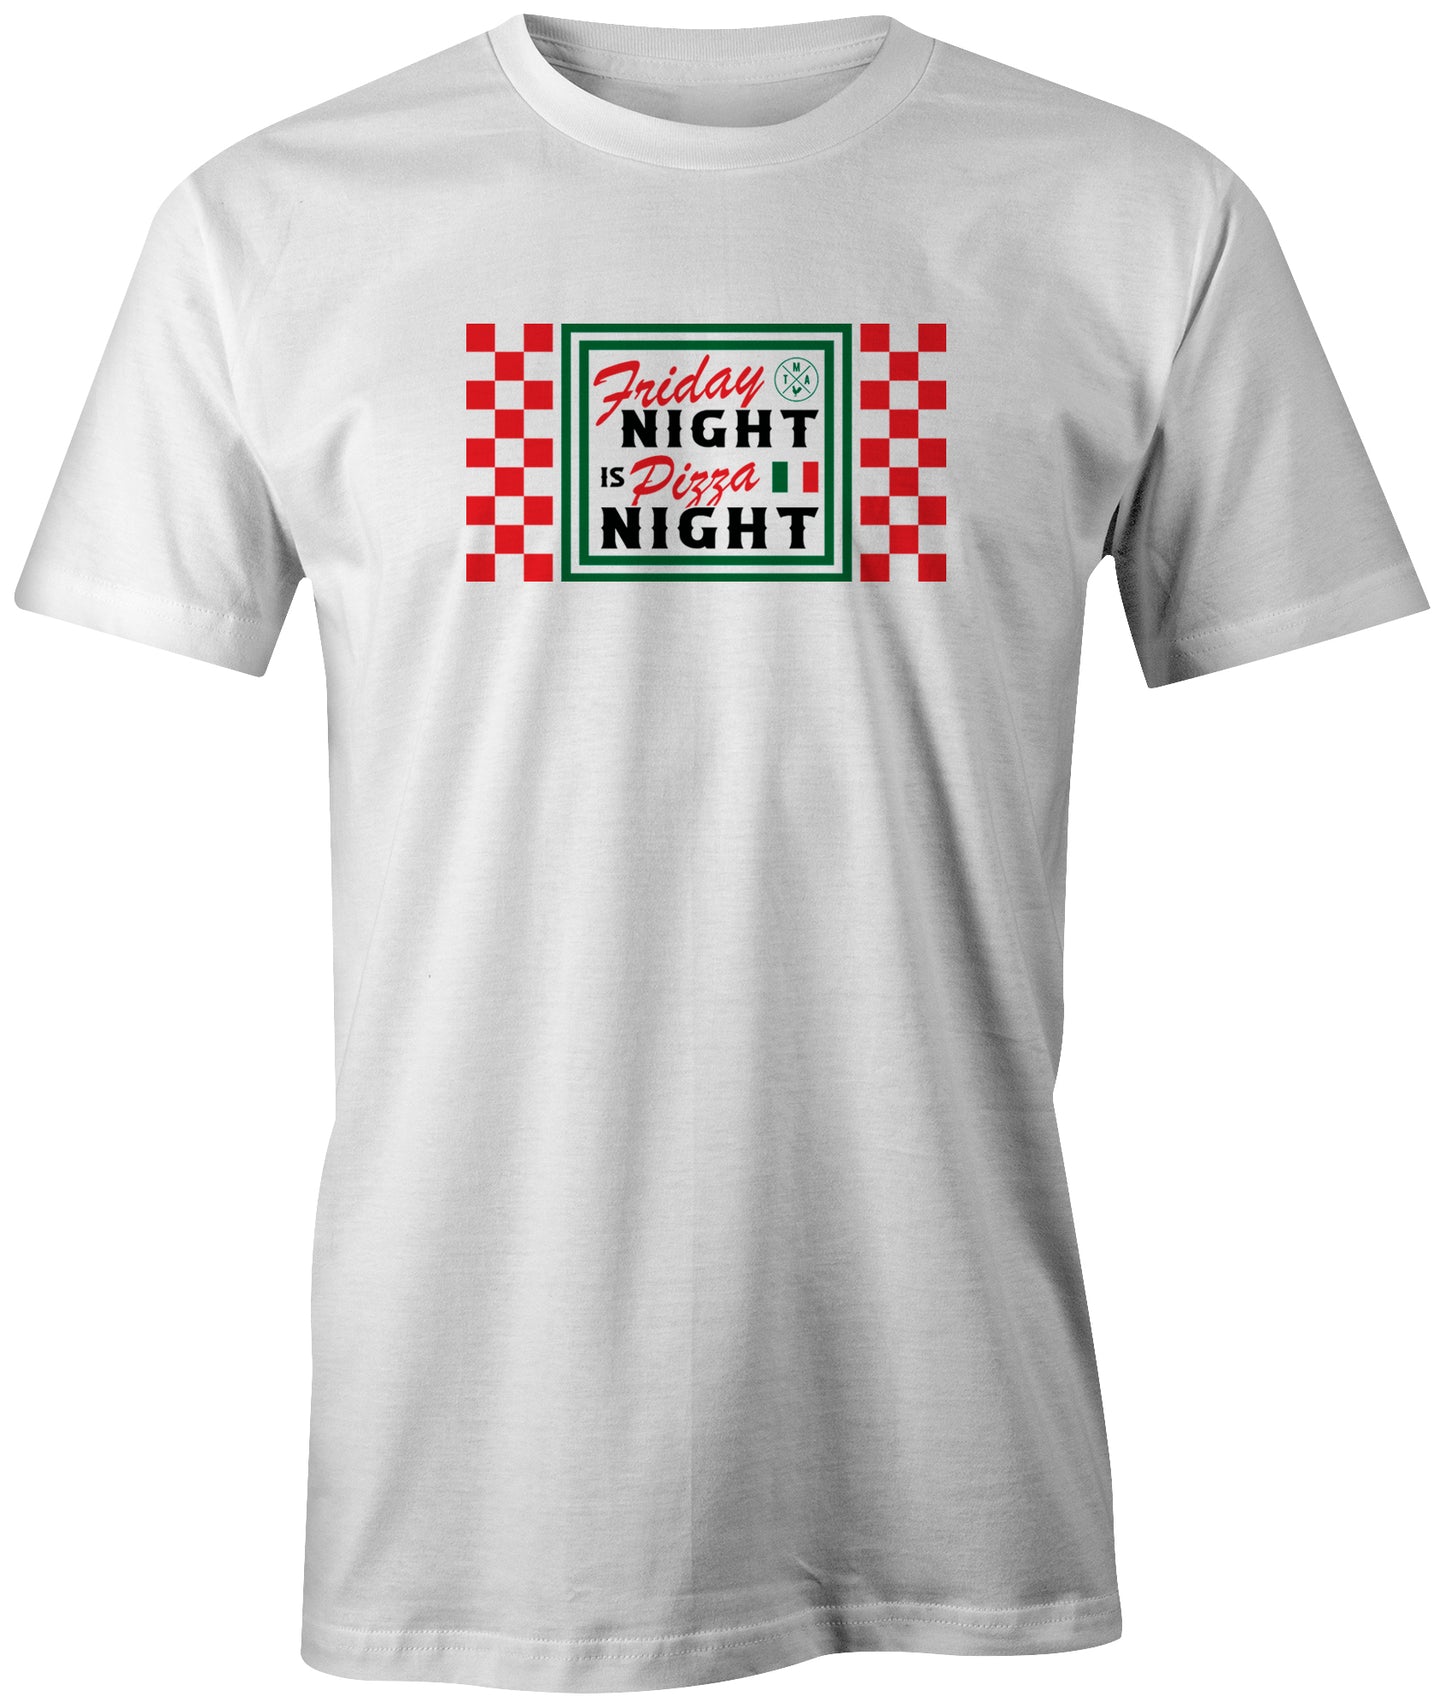 Friday Night is Pizza Night T-Shirt